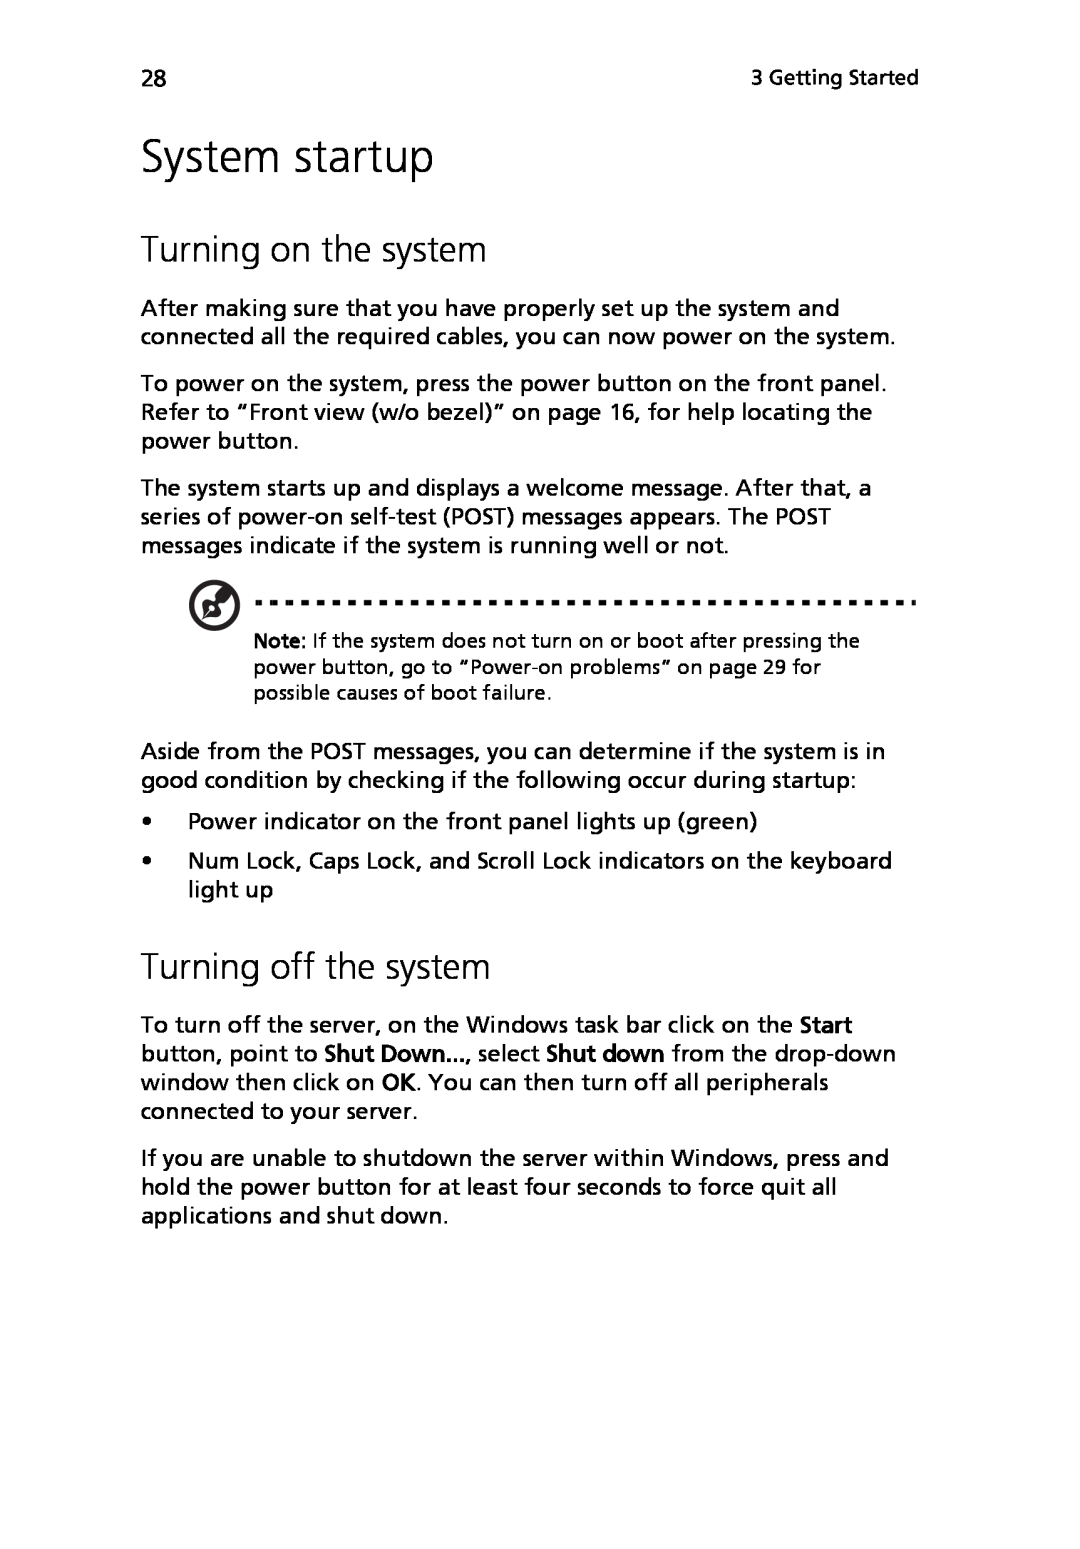 Acer Altos R710 manual System startup, Turning on the system, Turning off the system 